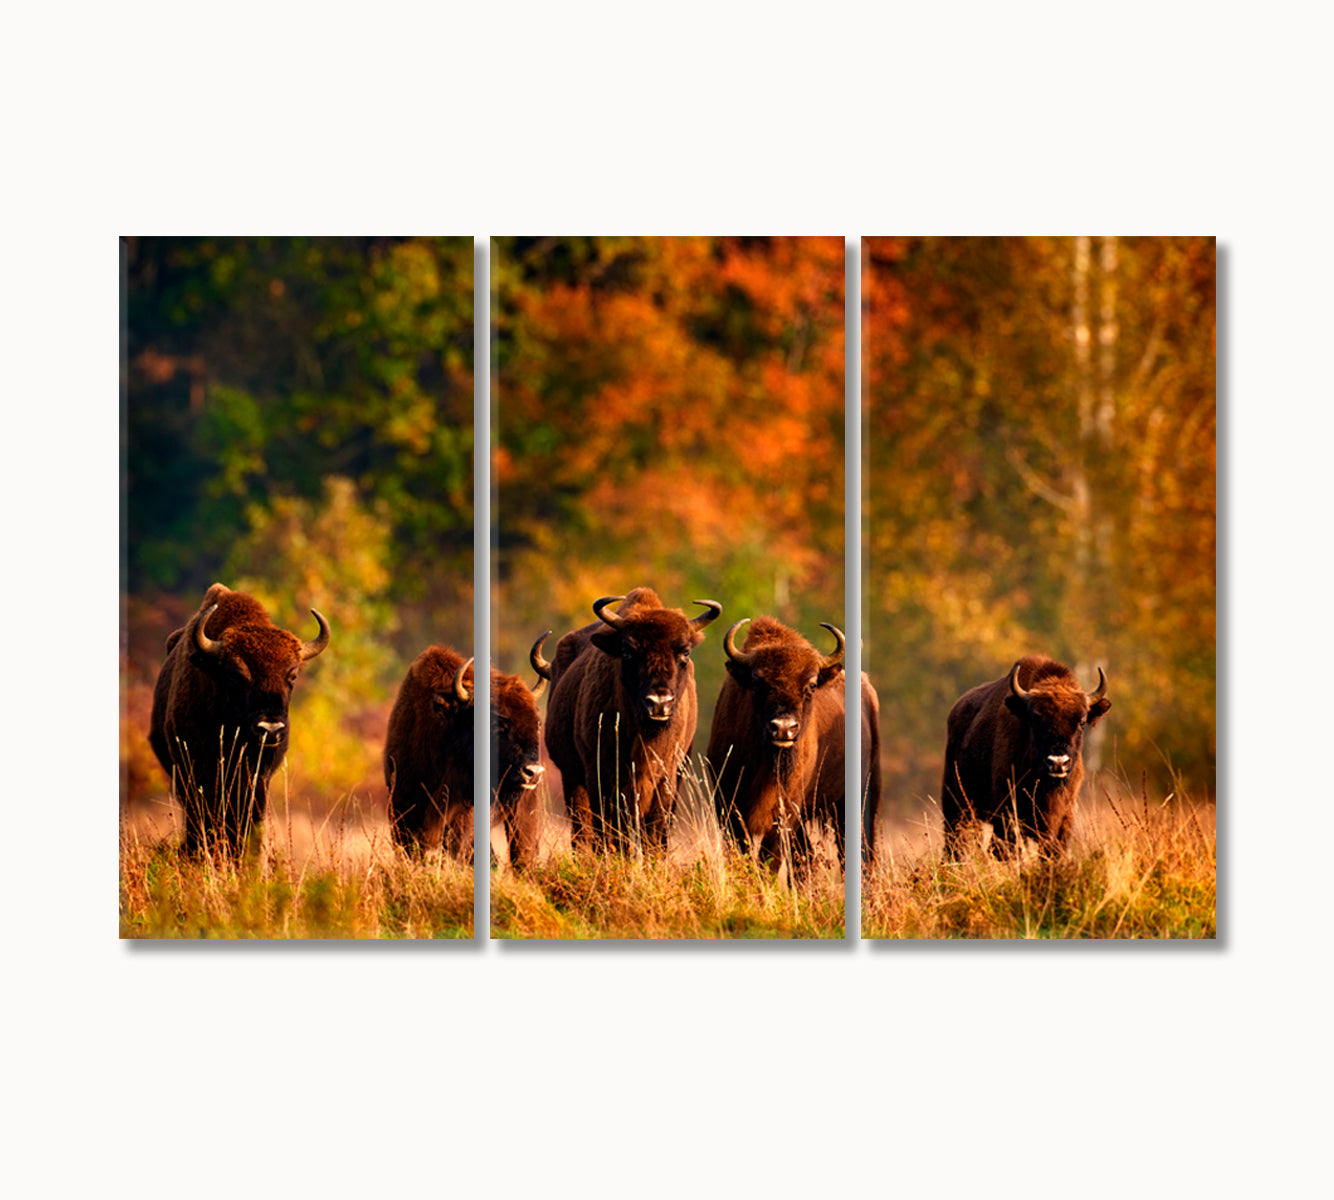 Bison Herd in the Autumn Forest Canvas Print-Canvas Print-CetArt-3 Panels-36x24 inches-CetArt